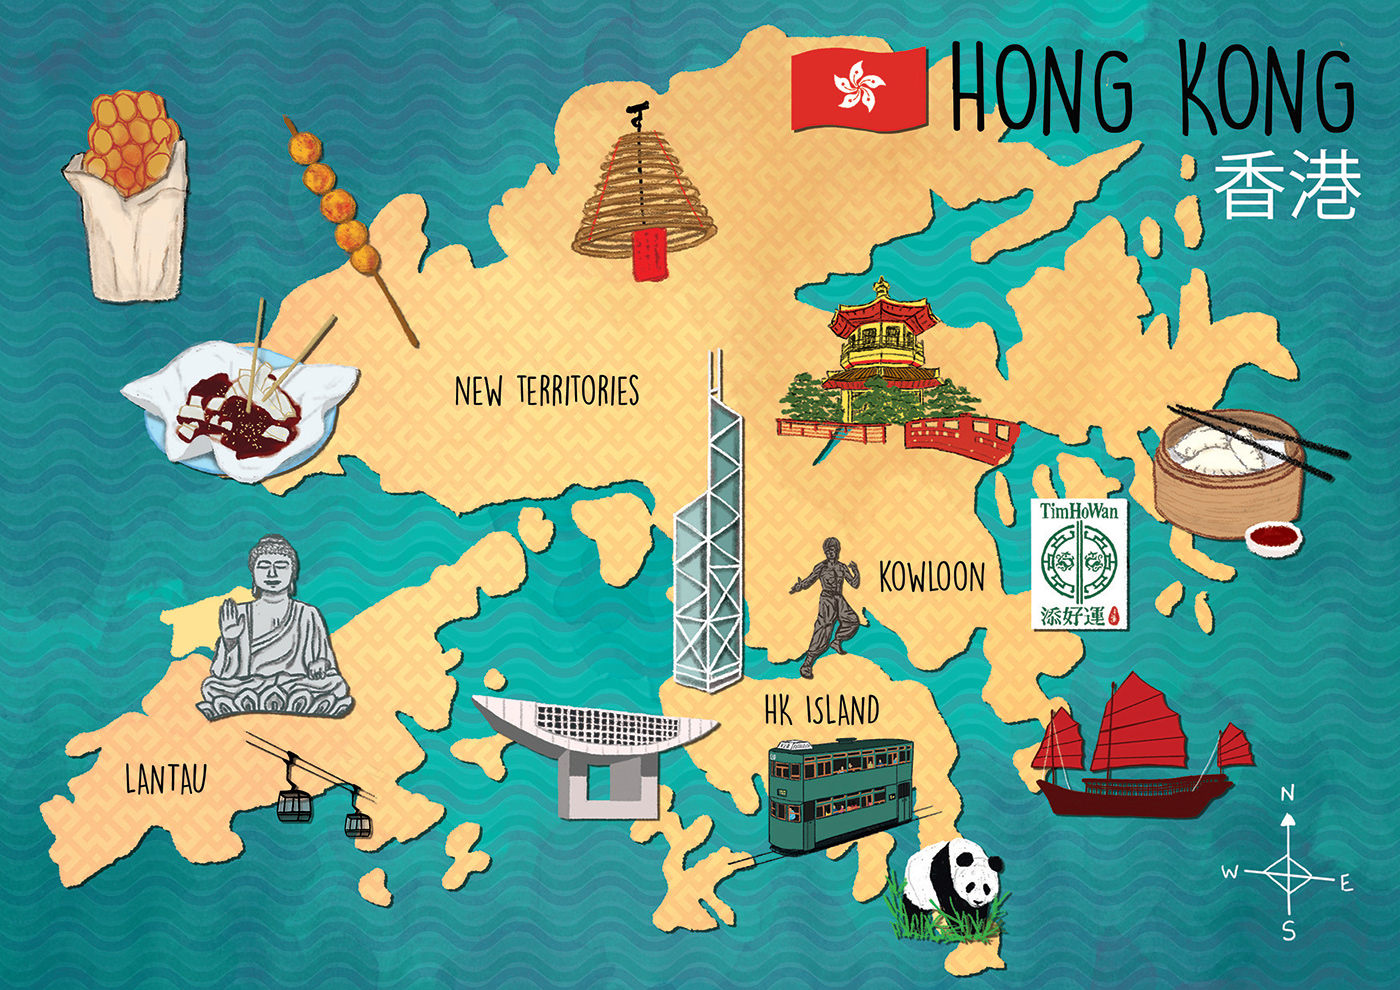 map maps illustrated maps India Travel city Hong Kong Ireland